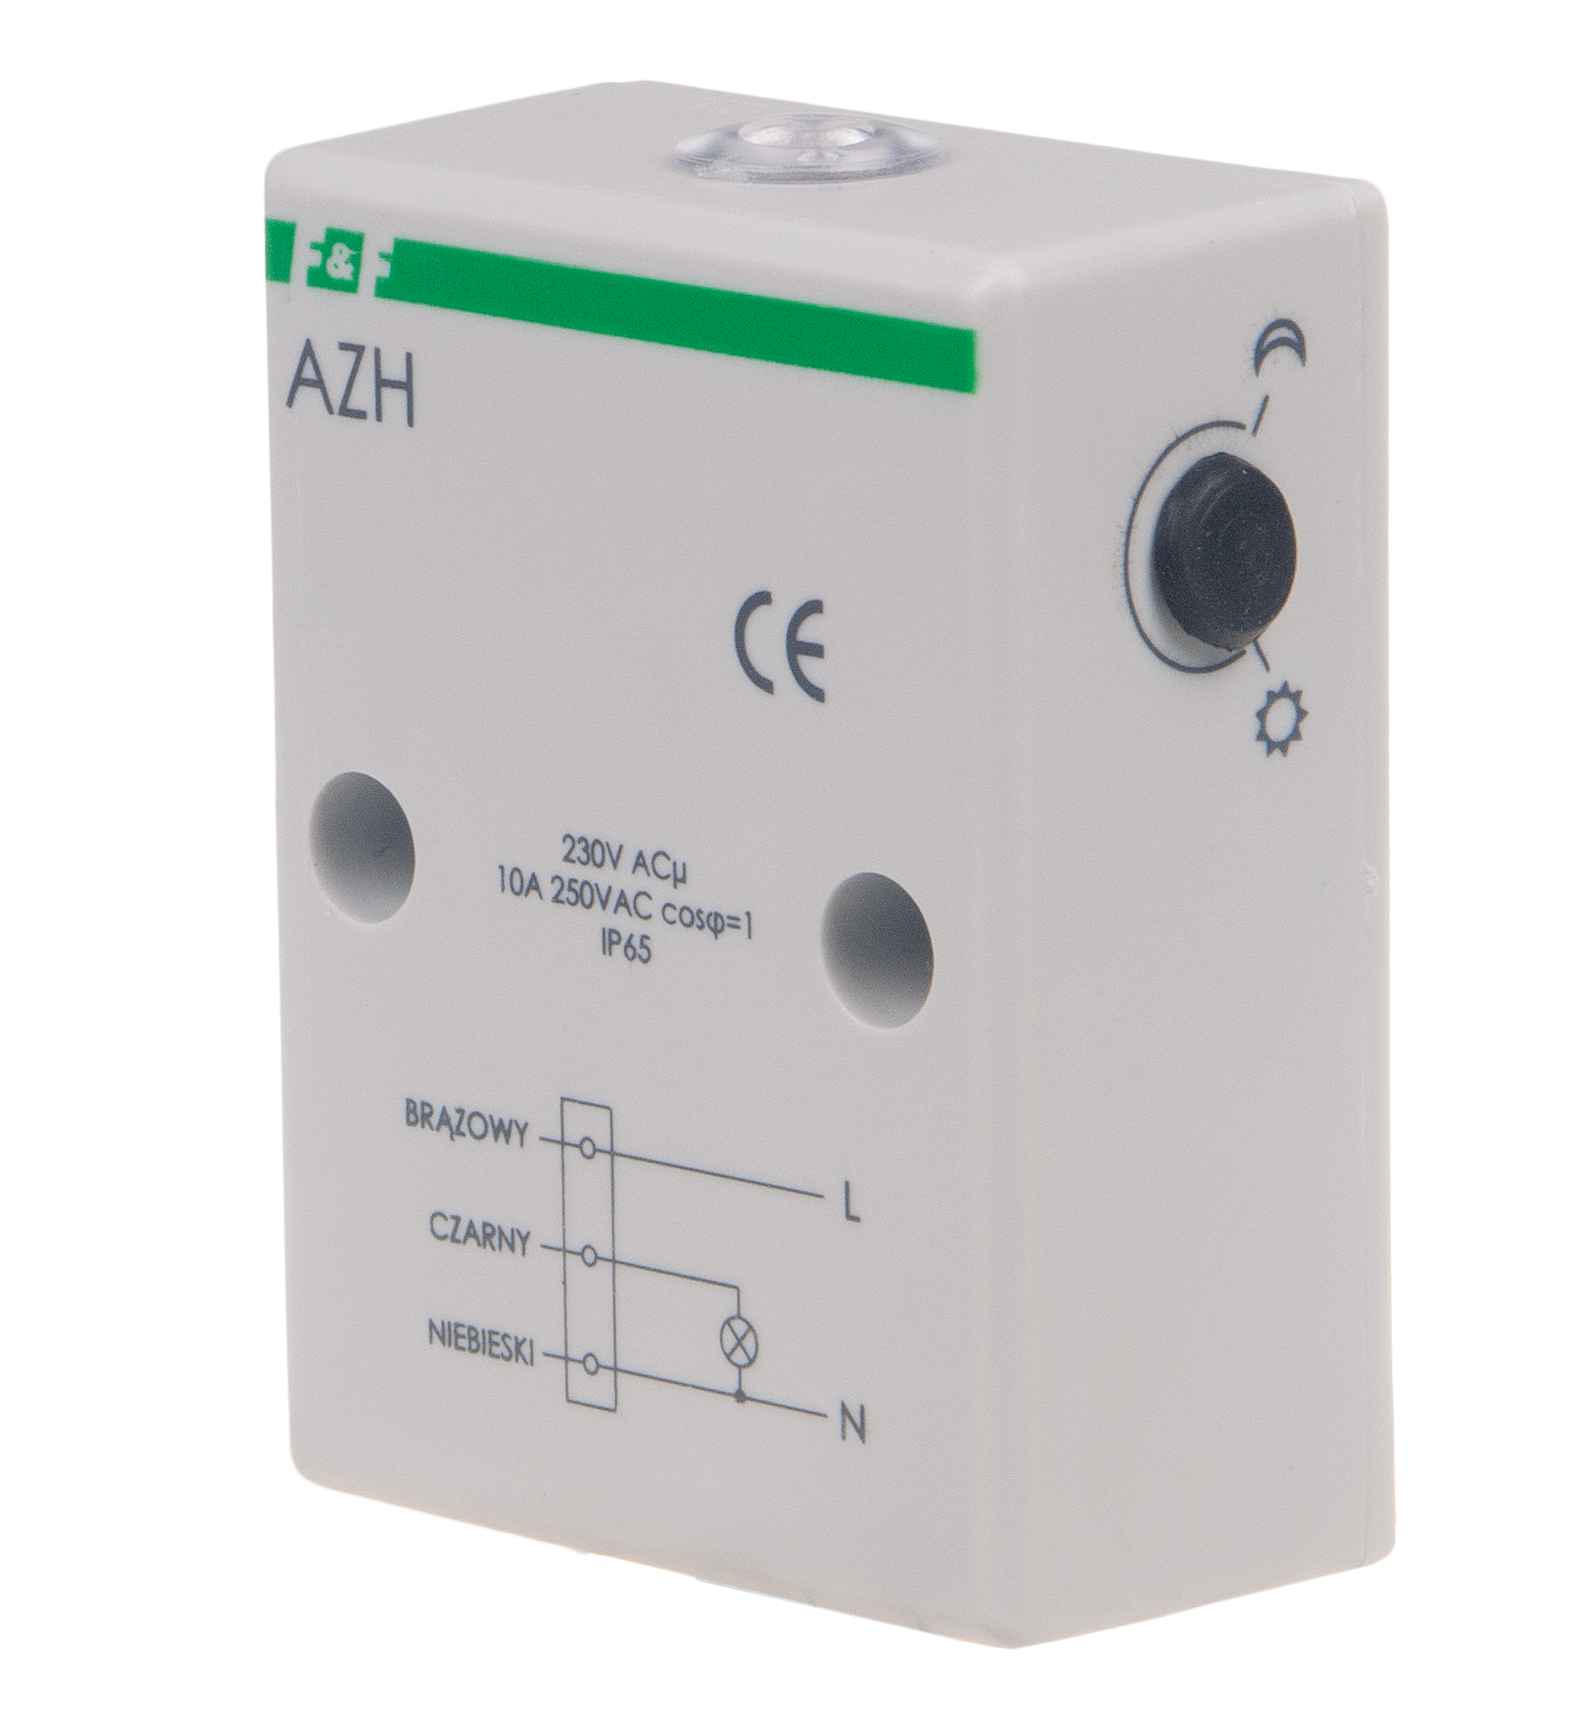 AZH light dependent relays